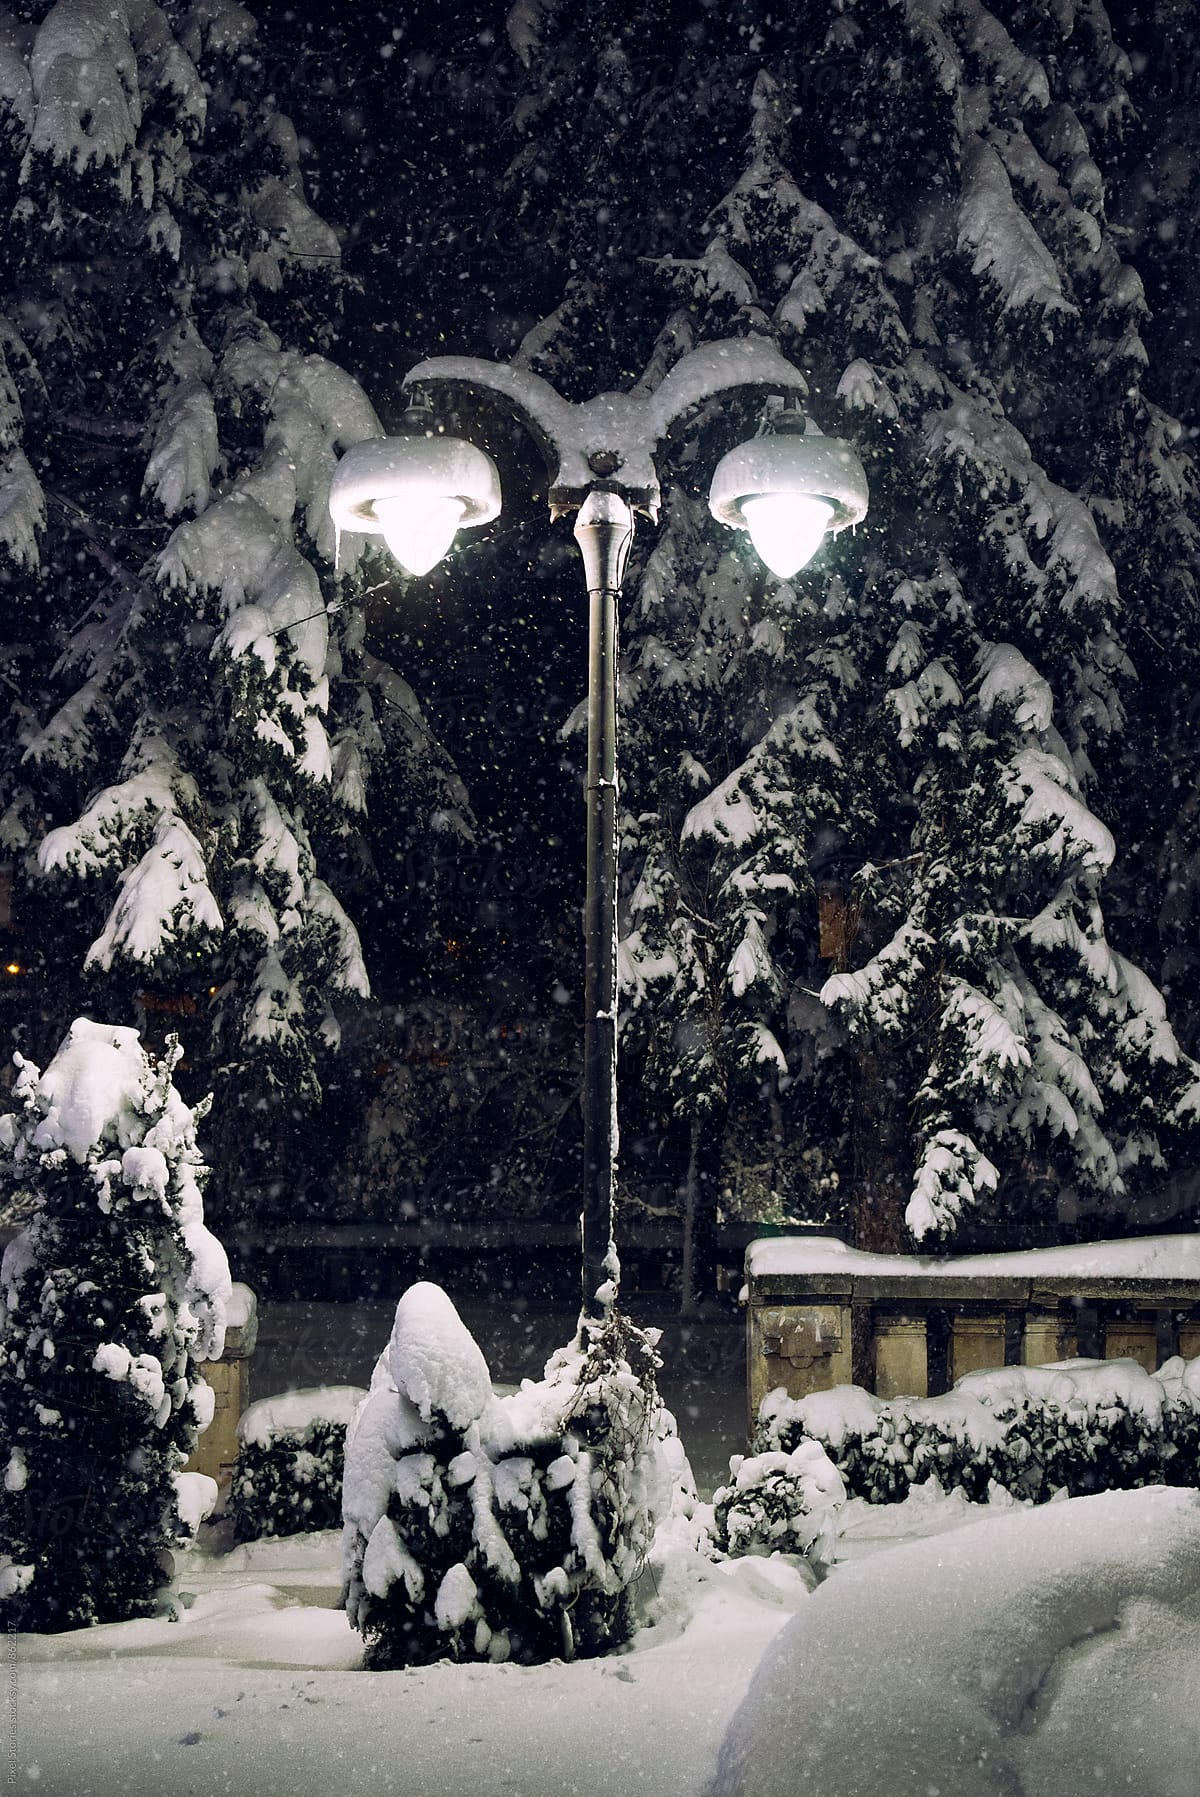 Street lamp on a snowy night